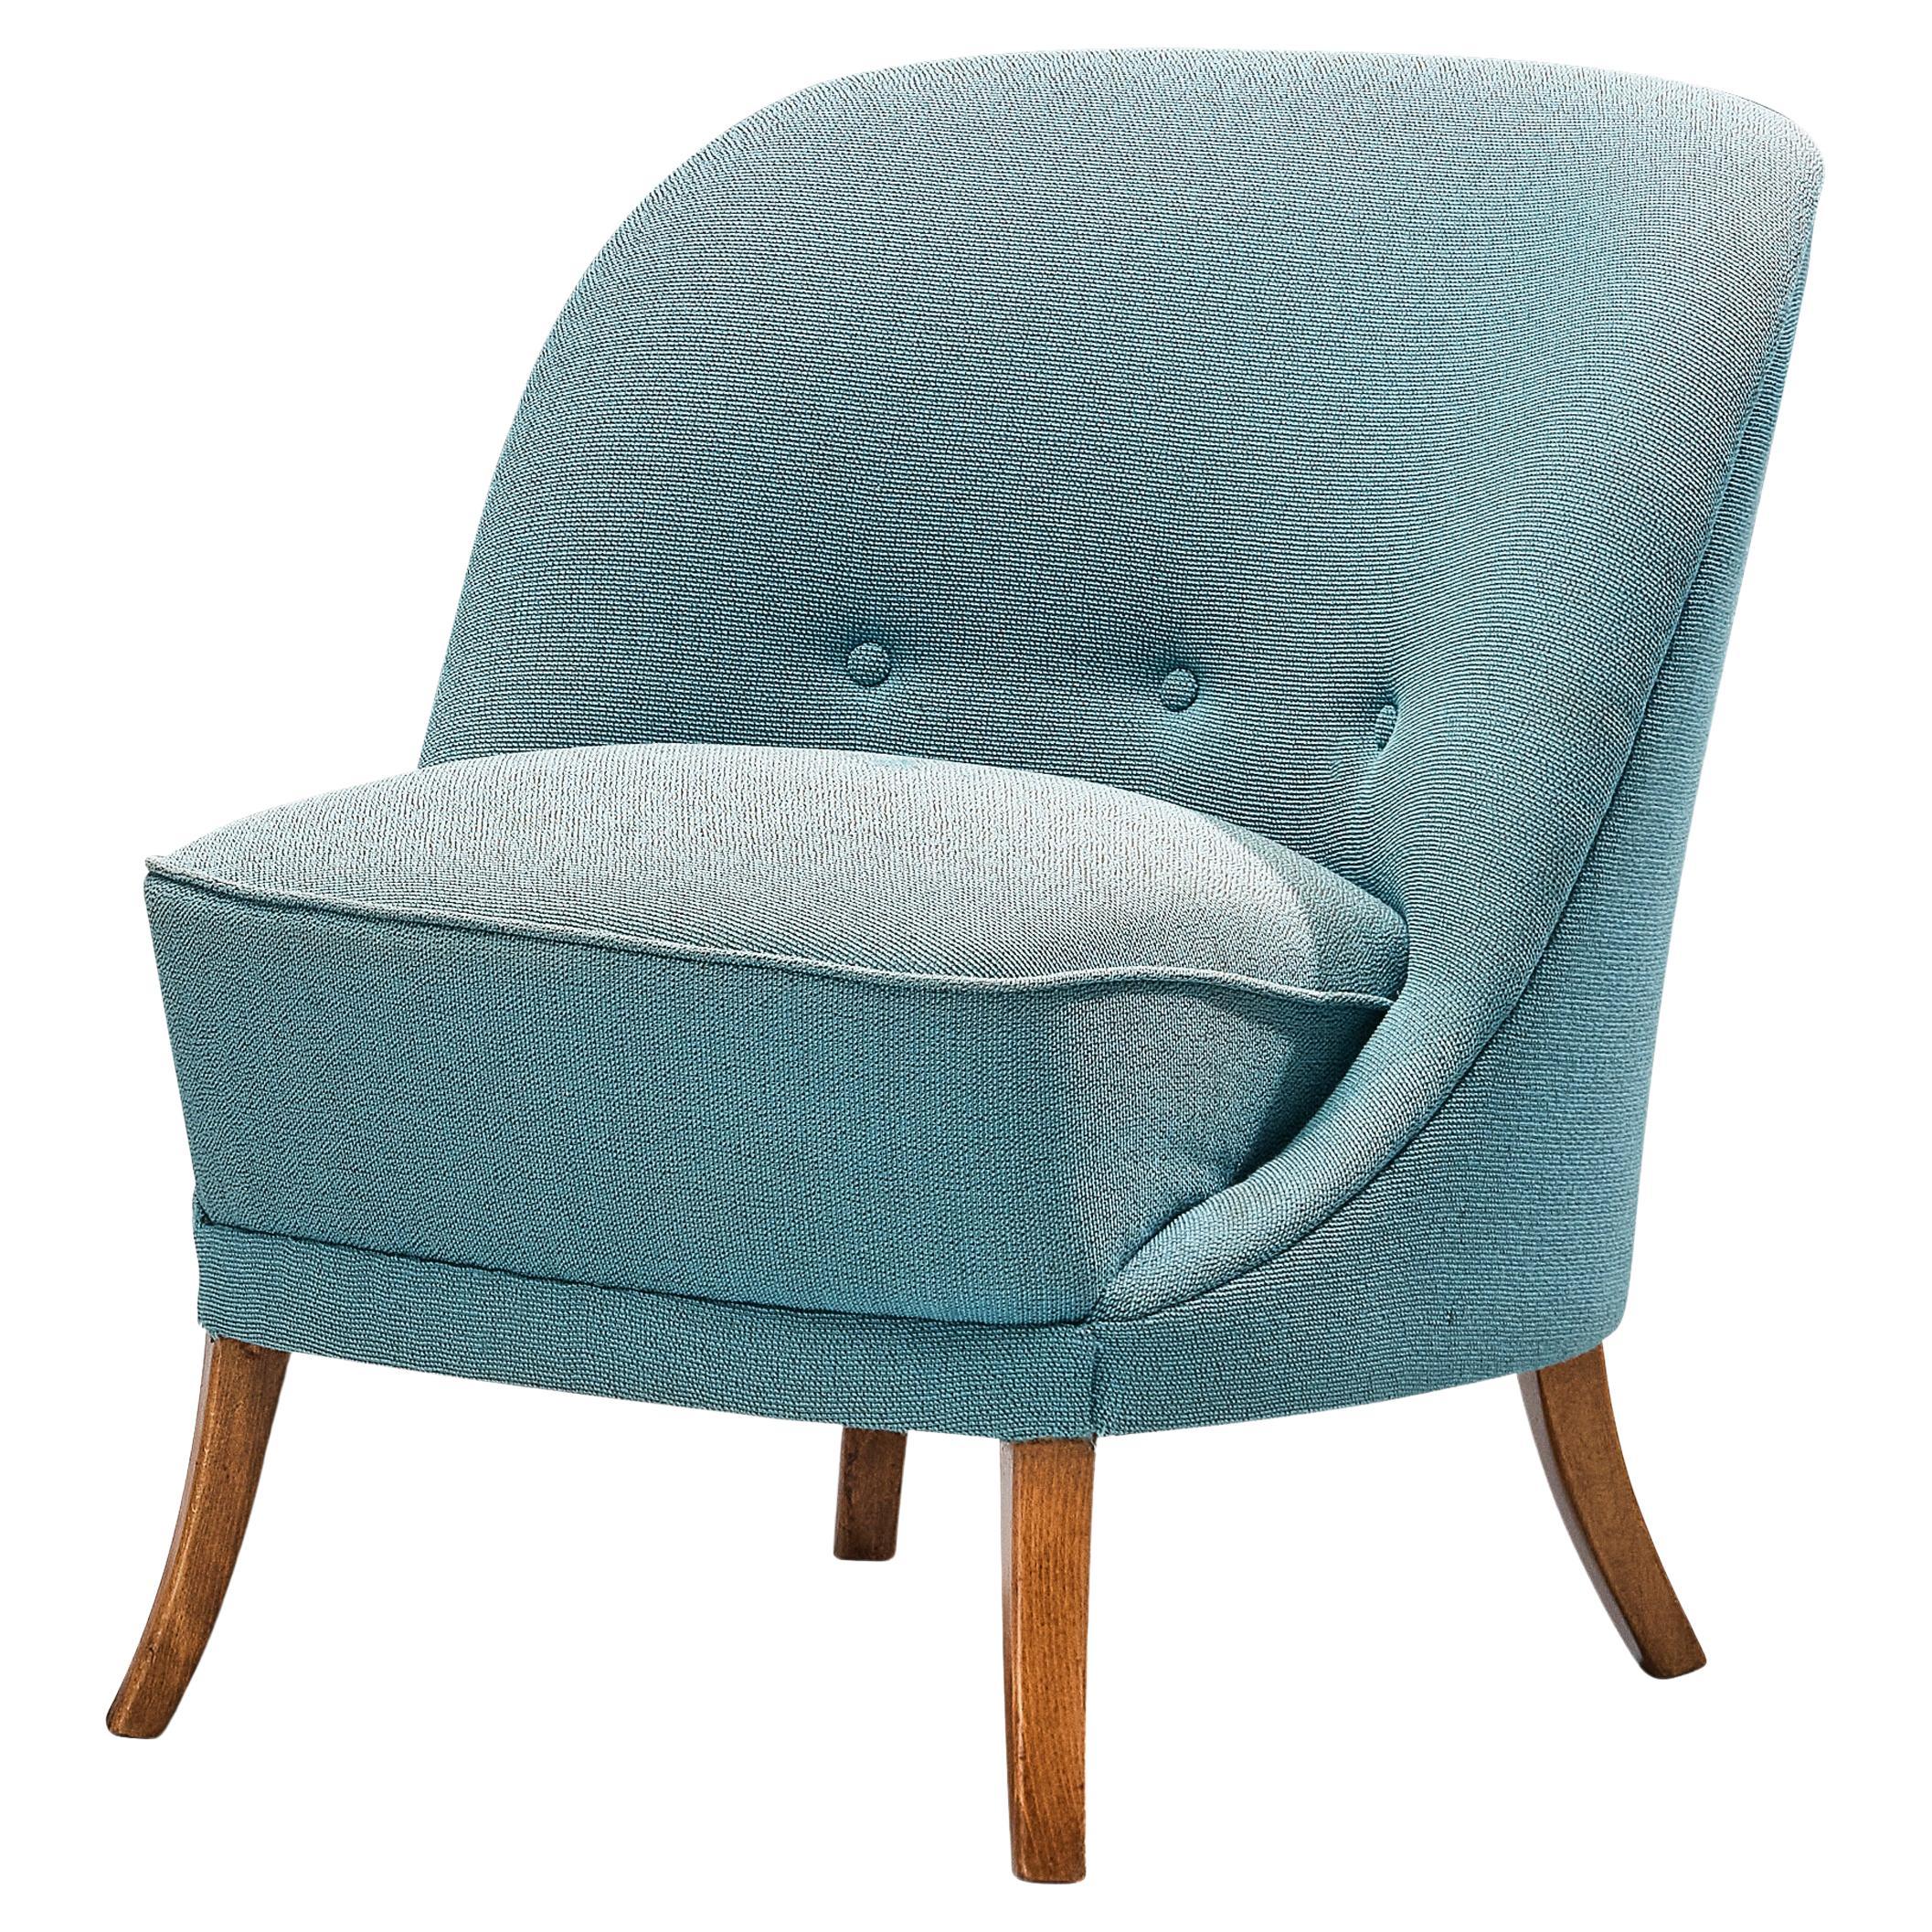 Chaise longue délicate en tissu bleu clair